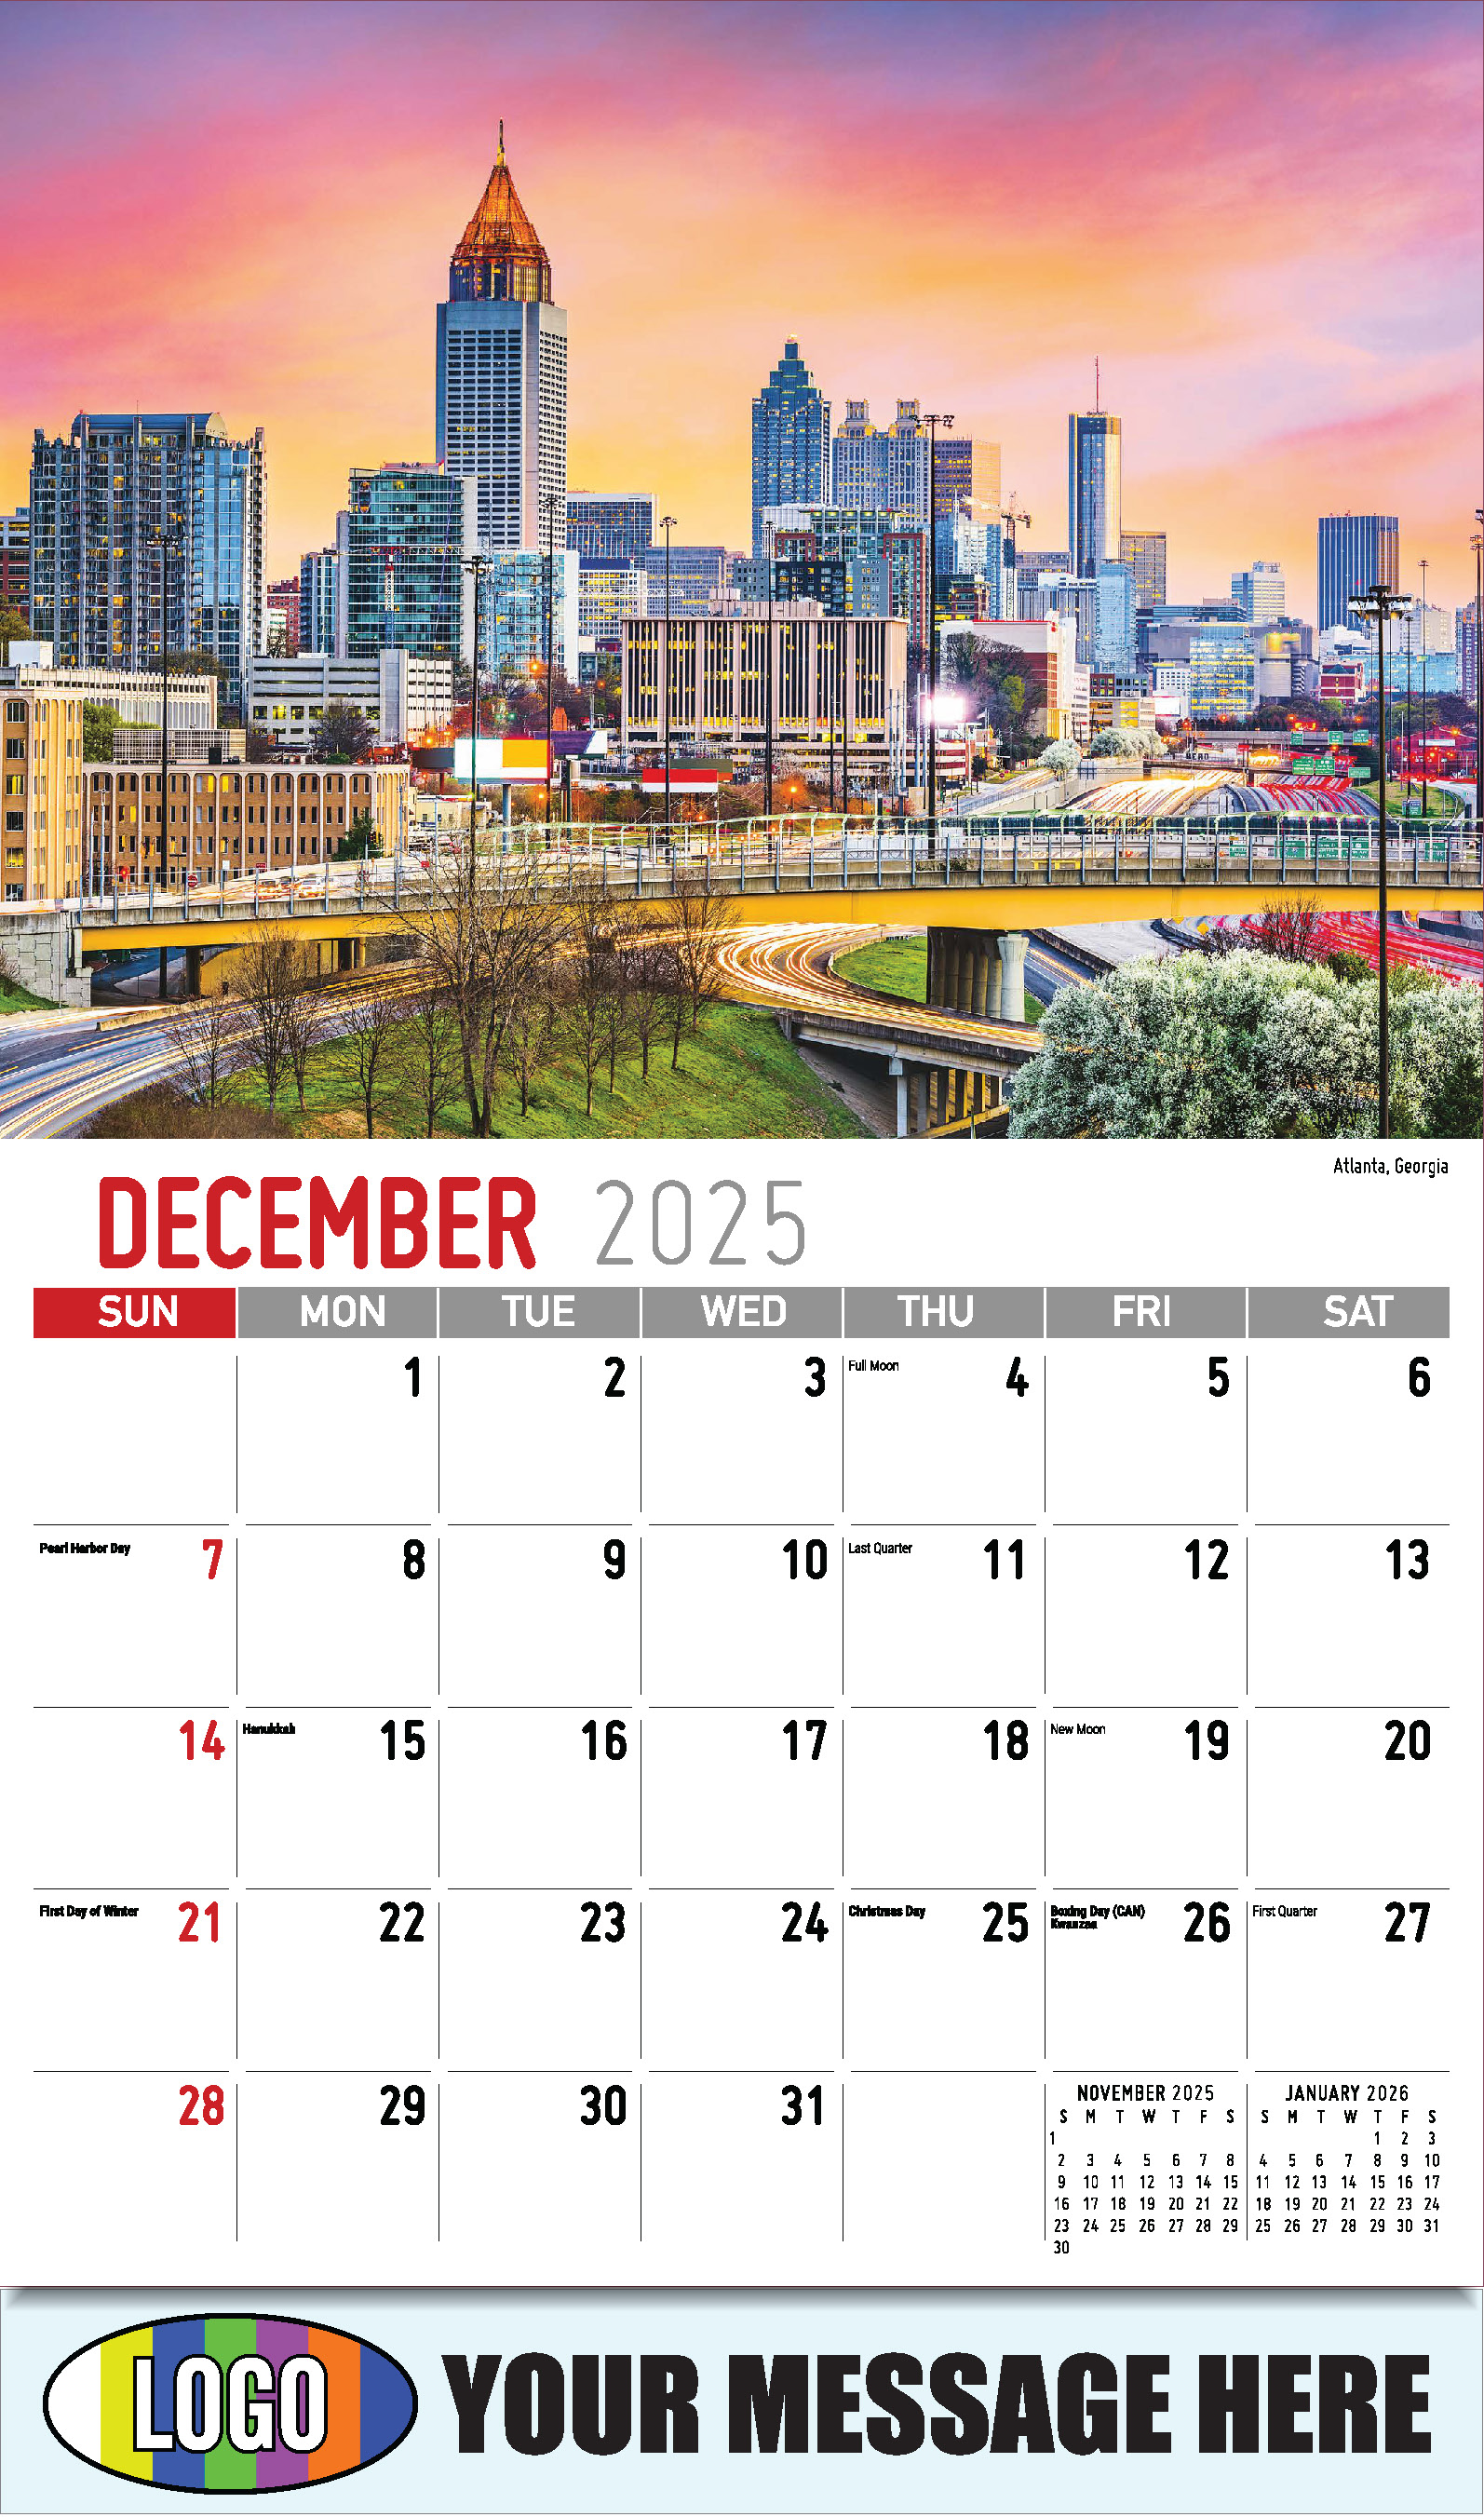 Scenes of Southeast USA 2025 Business Promo Wall Calendar - December